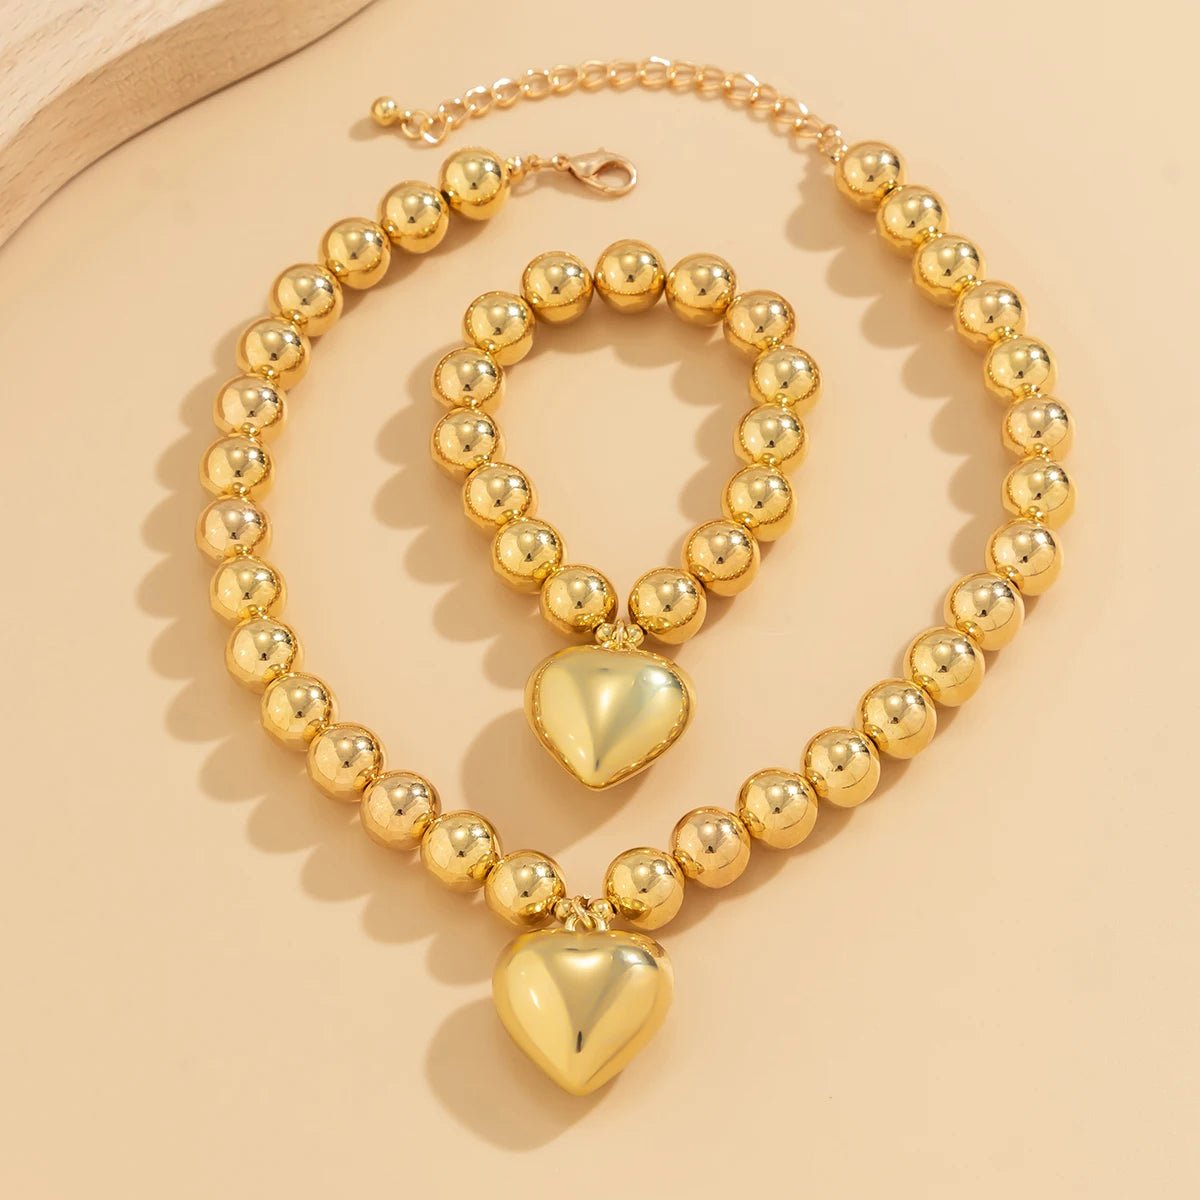 Chunky Heart Pendant Necklace and Bracelet Set - Veinci